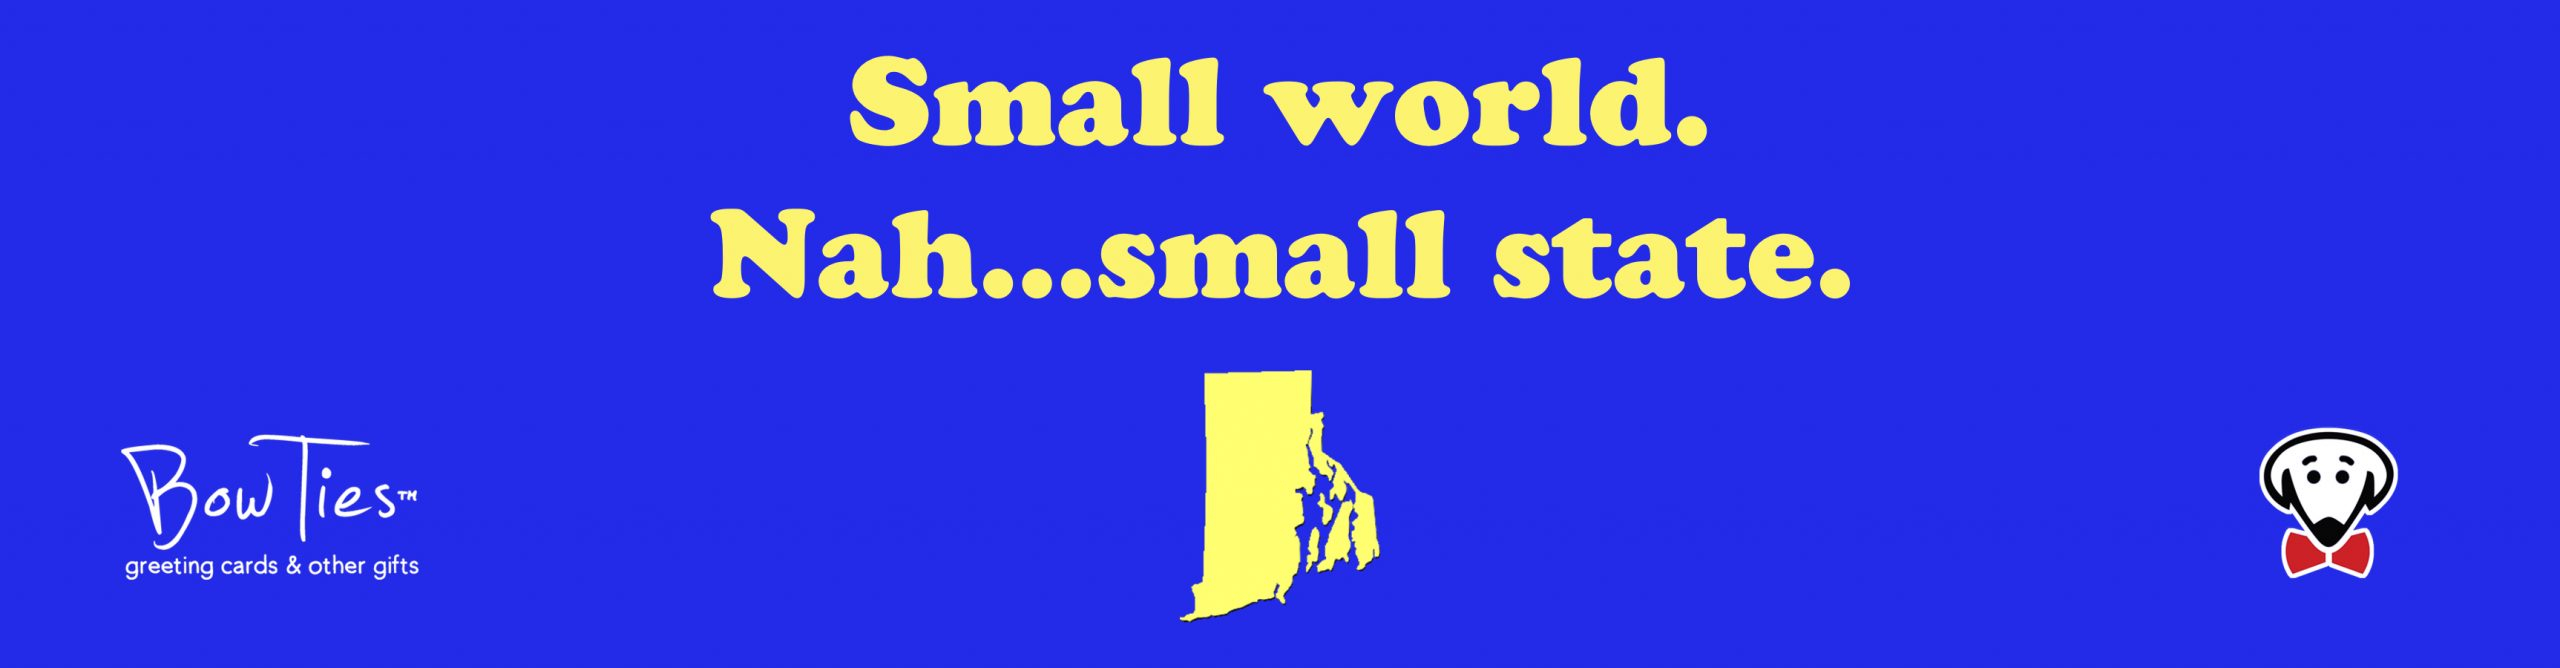 Small world. Nah…small state. (Rhode Island) – sticker